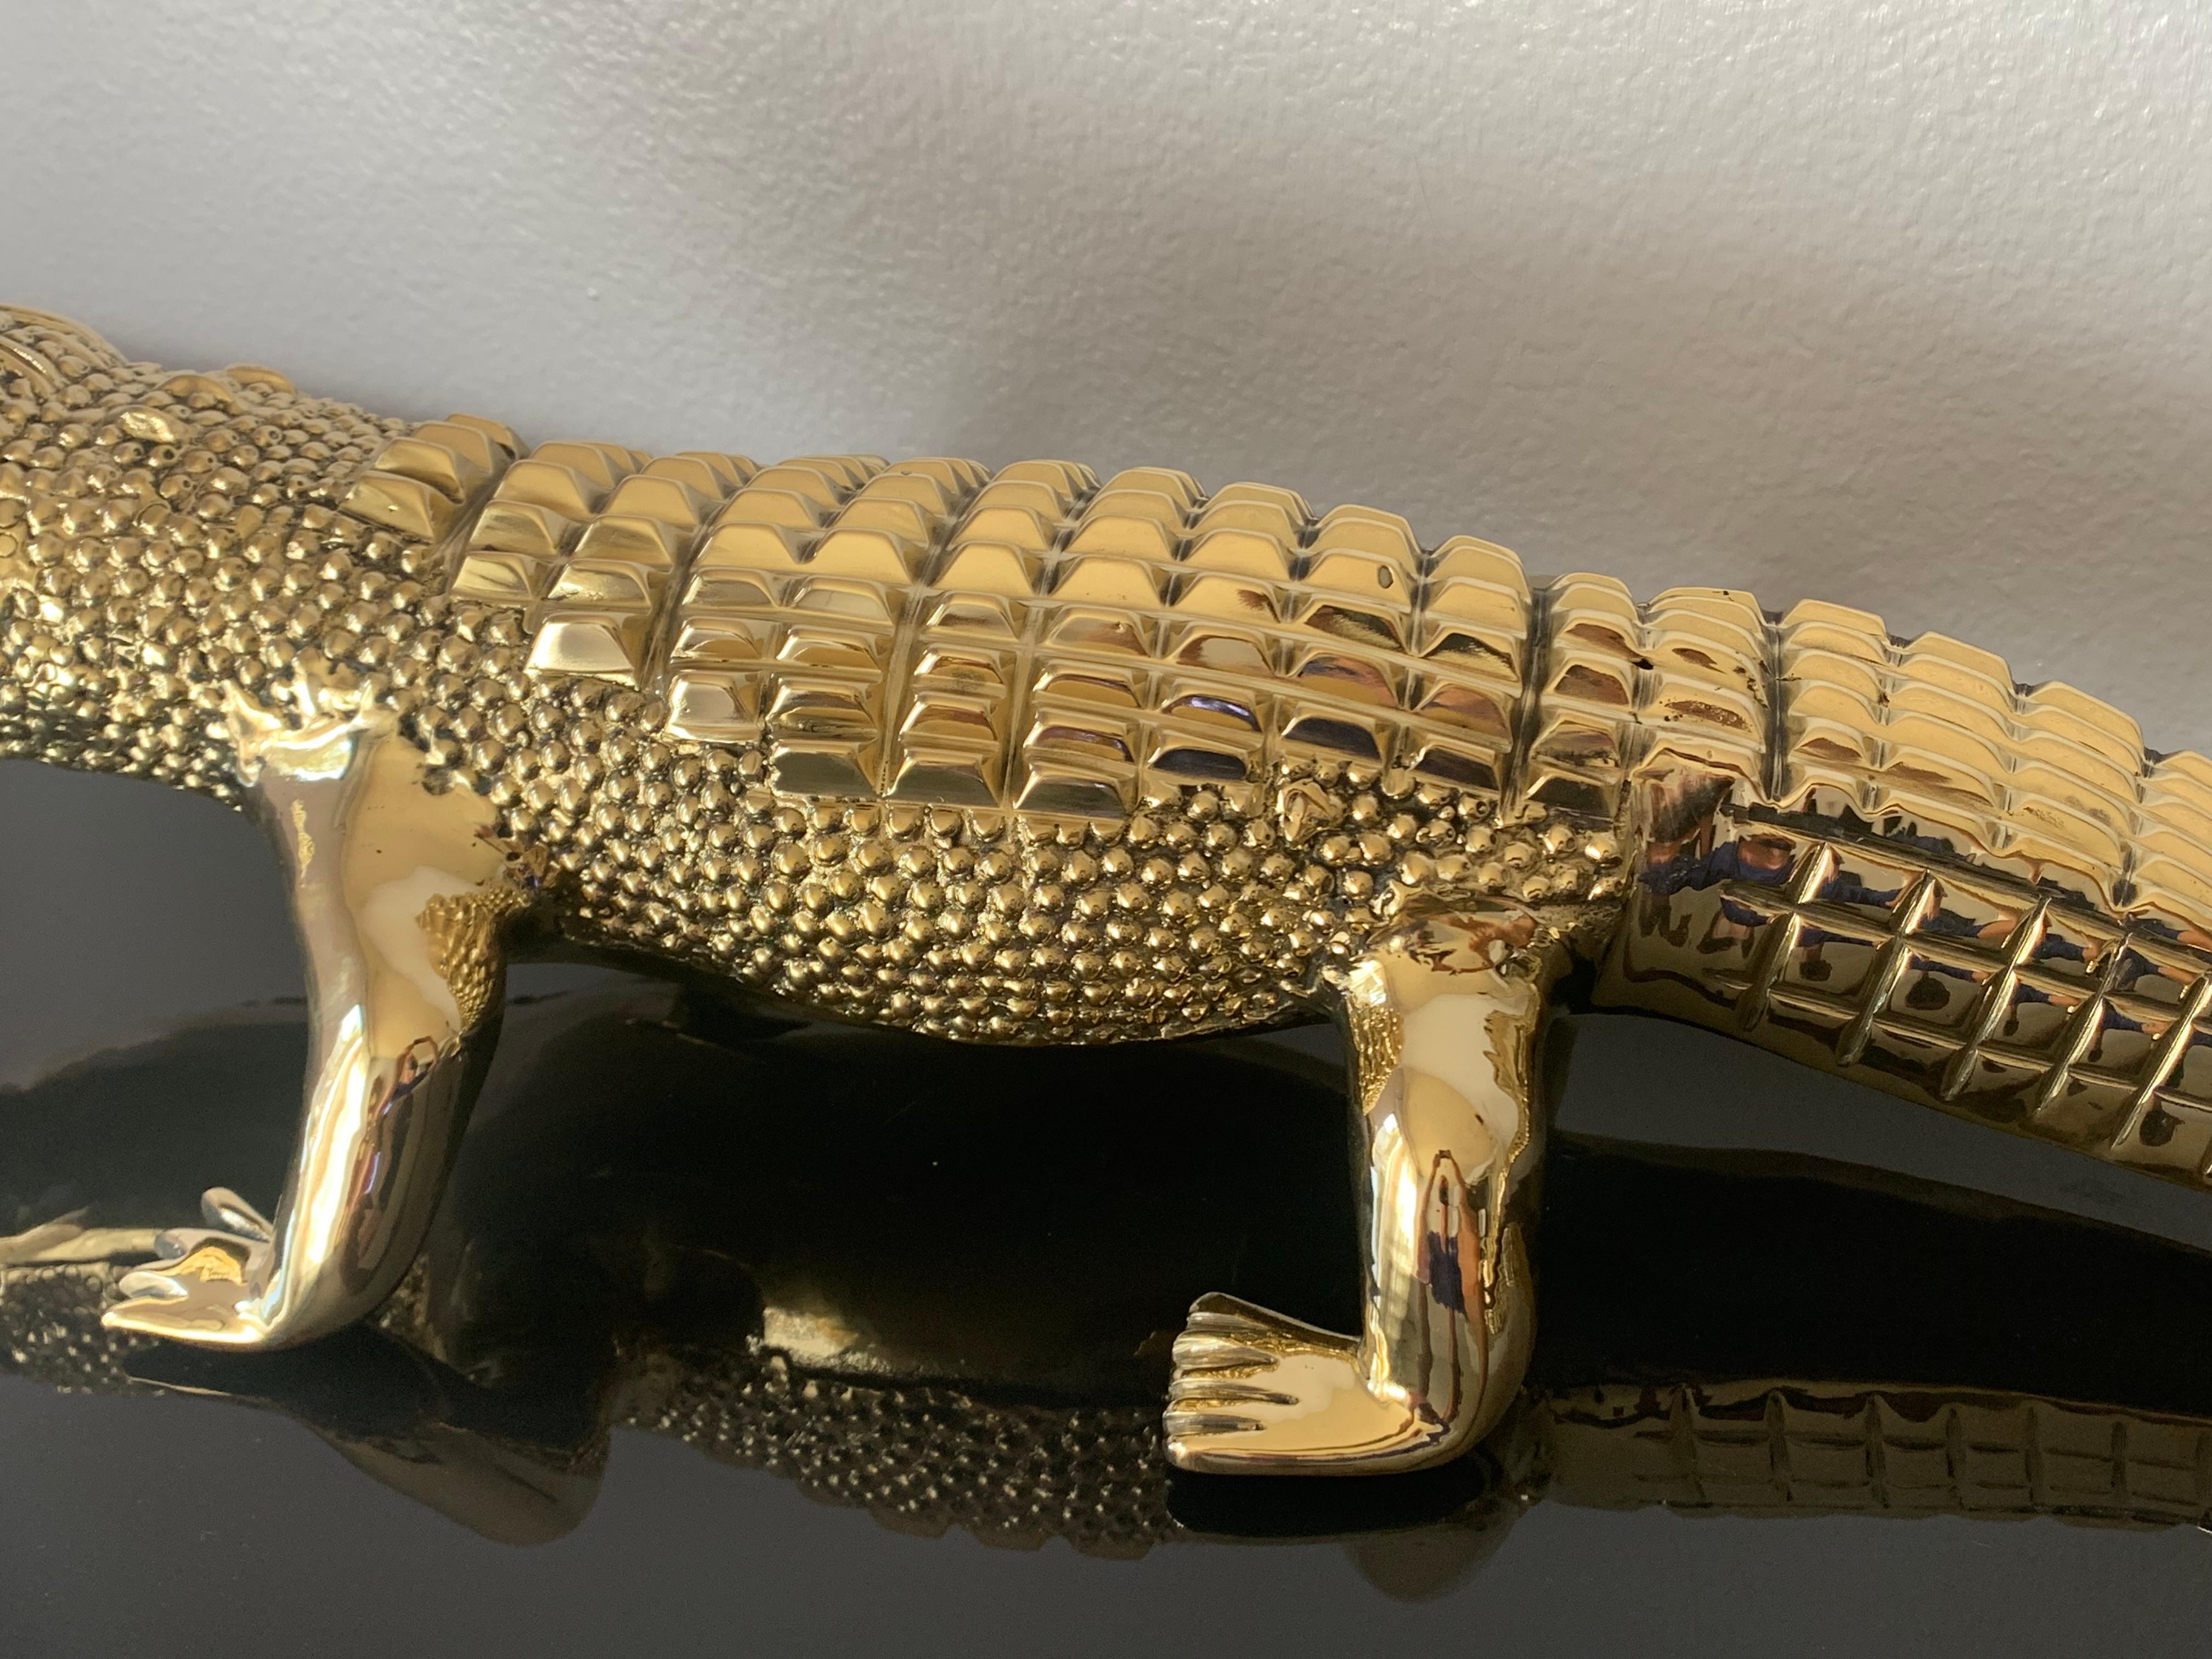 Polished Brass Crocodile or Alligator Sculpture Pet